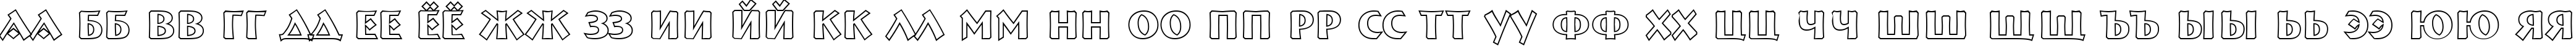 Пример написания русского алфавита шрифтом a_BremenBldOtl